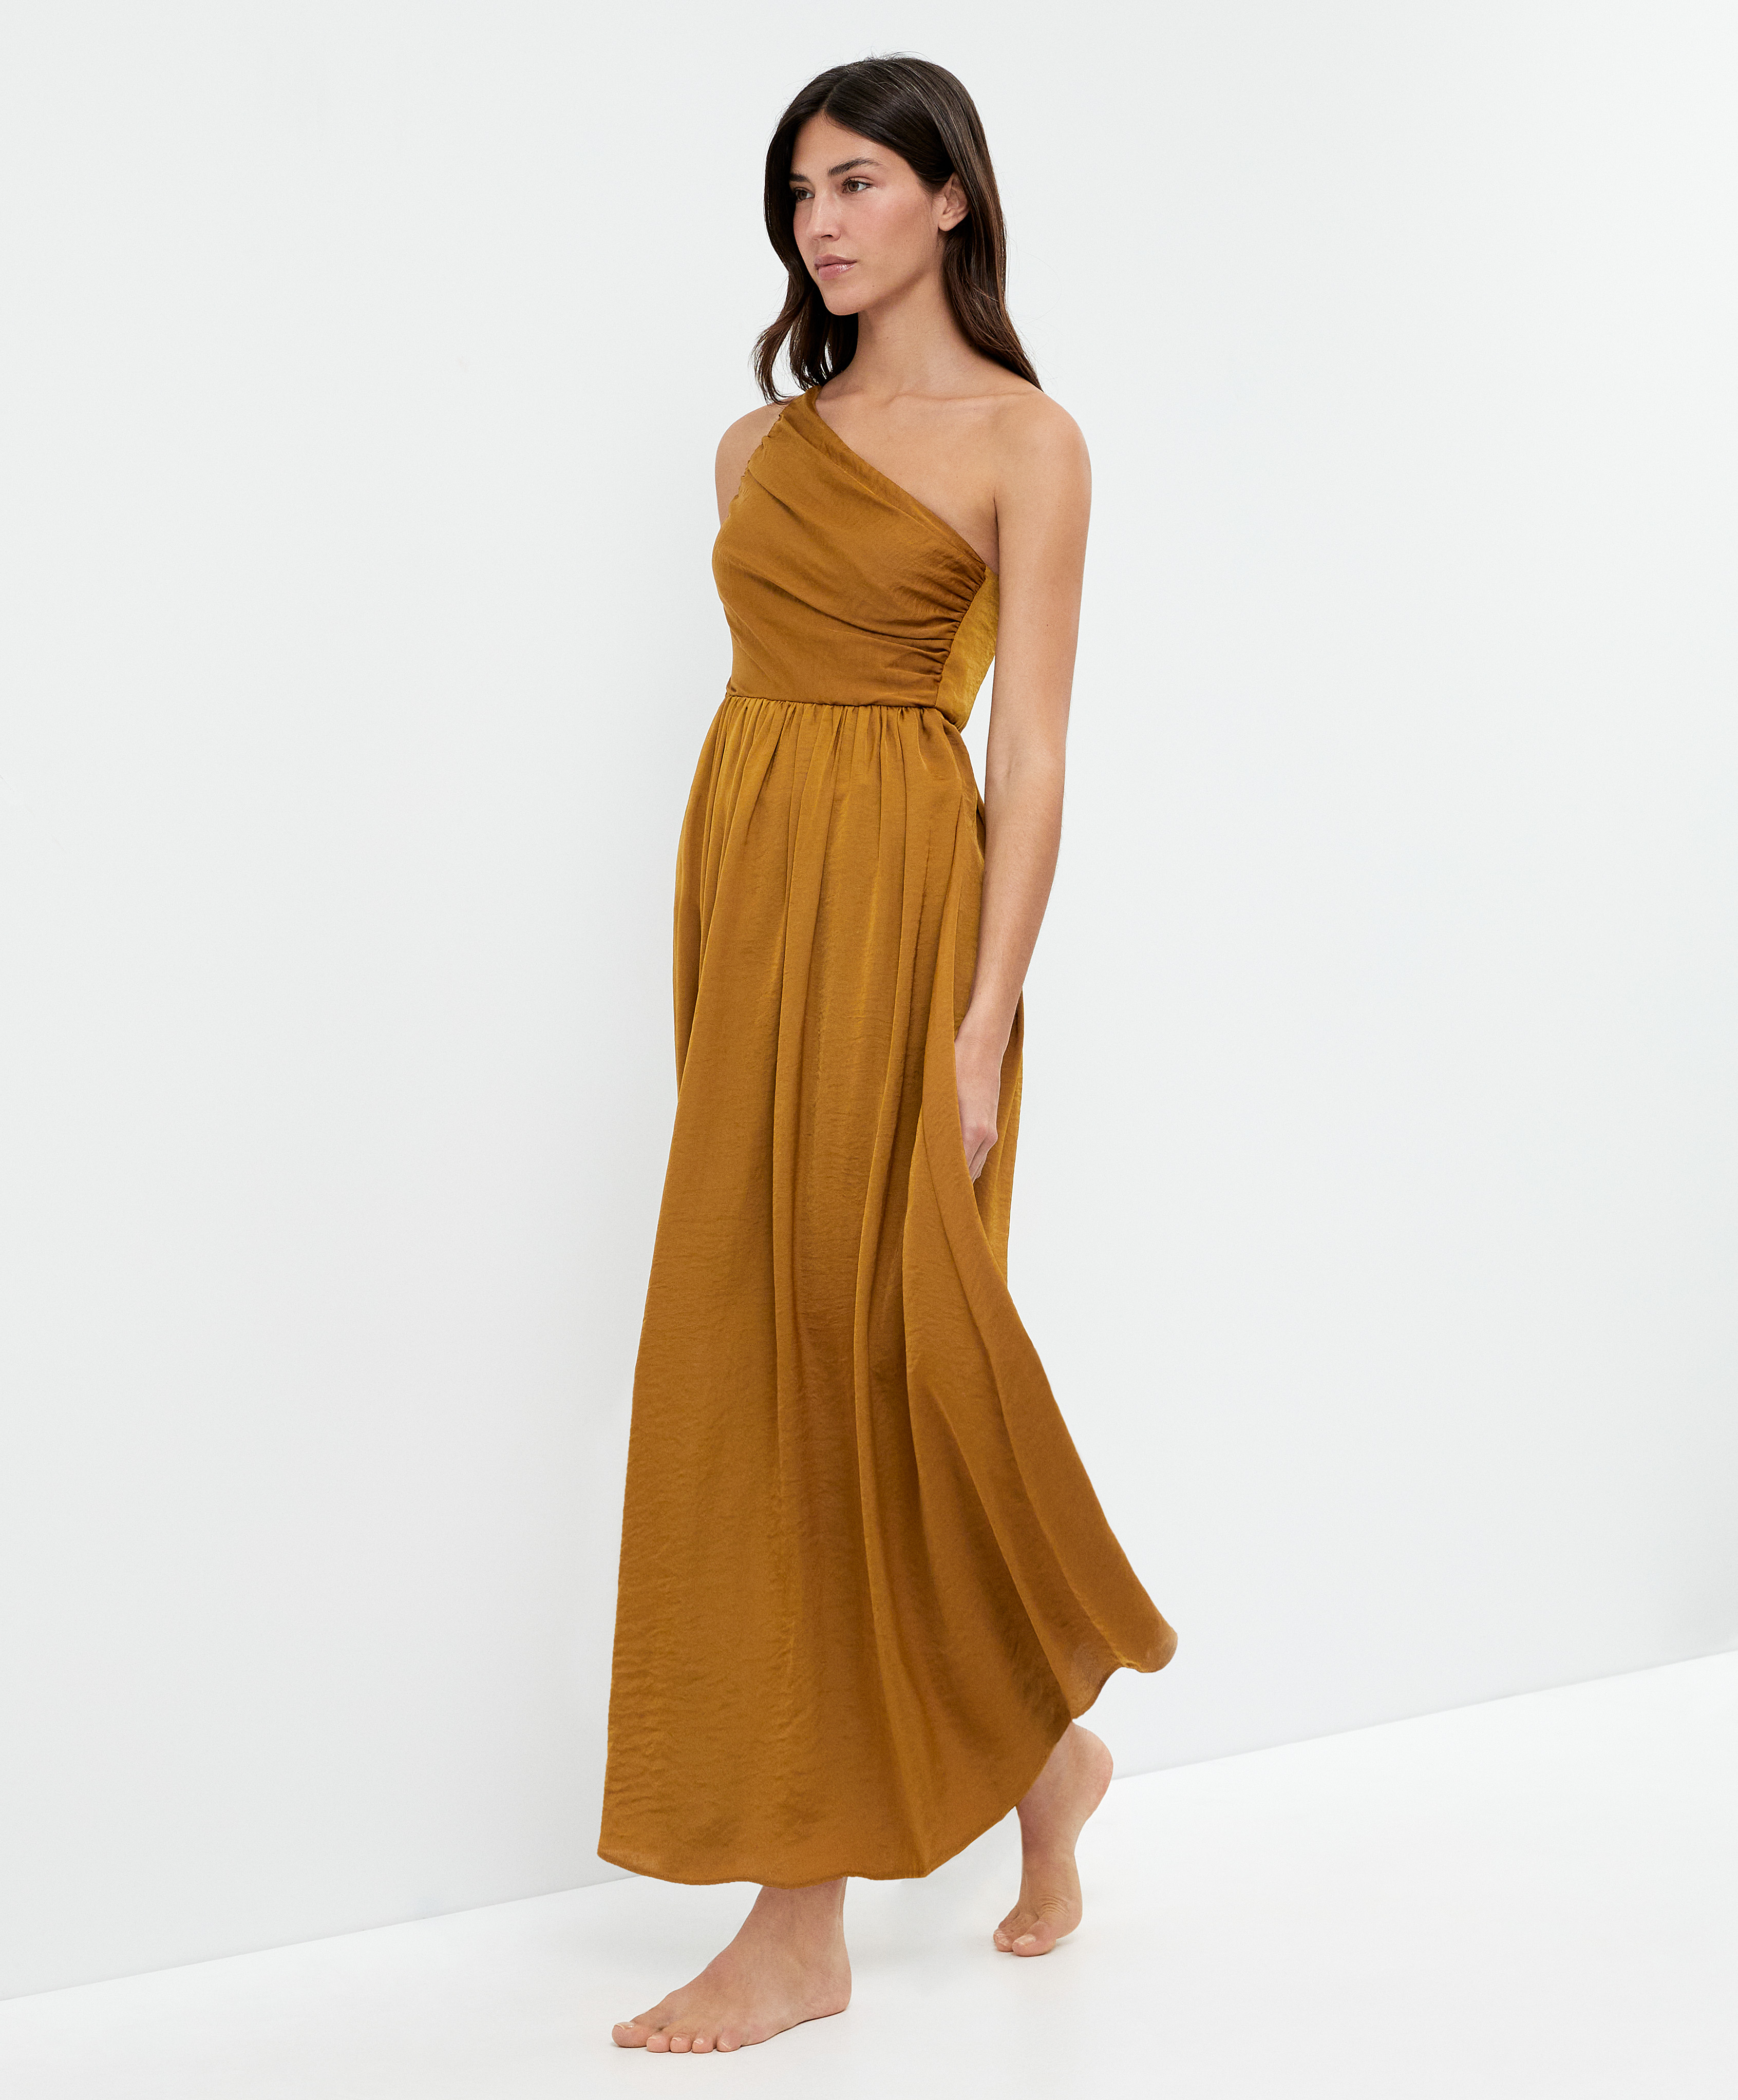 Long asymmetric dress with a satin finish